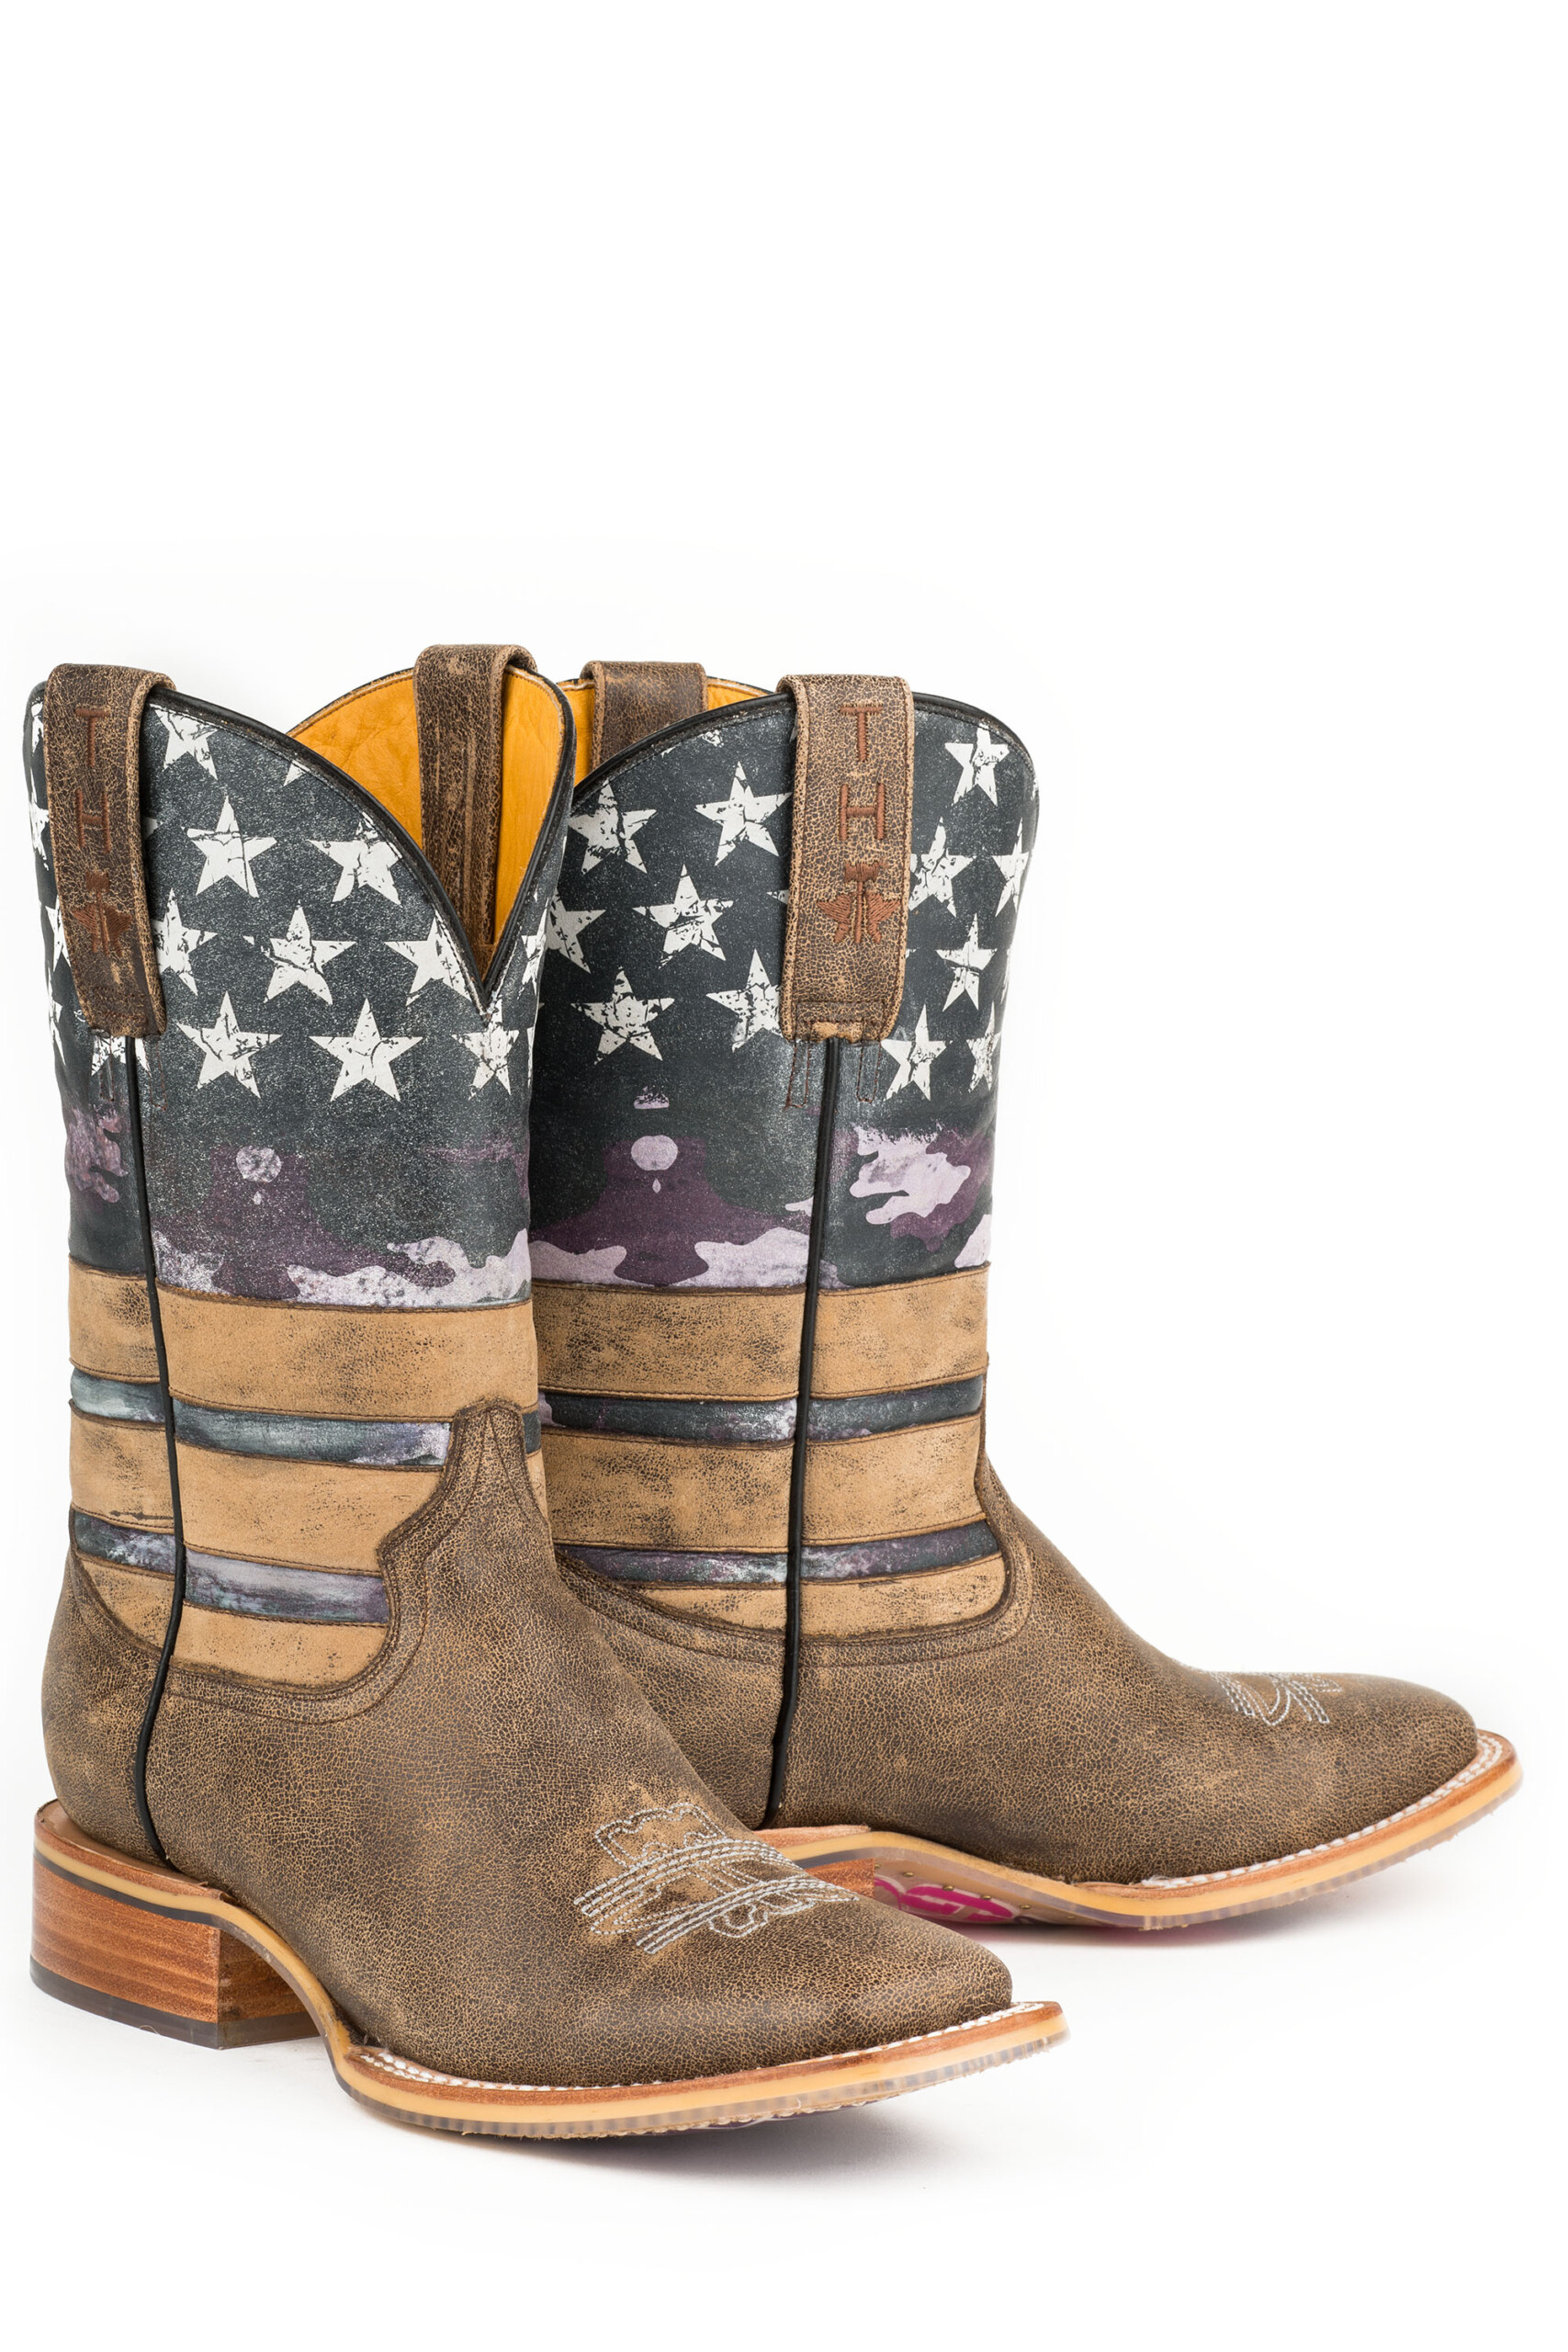 Tin Haul Ladies AMERICAN WOMAN Cowboy Boots - Size-Chart.net